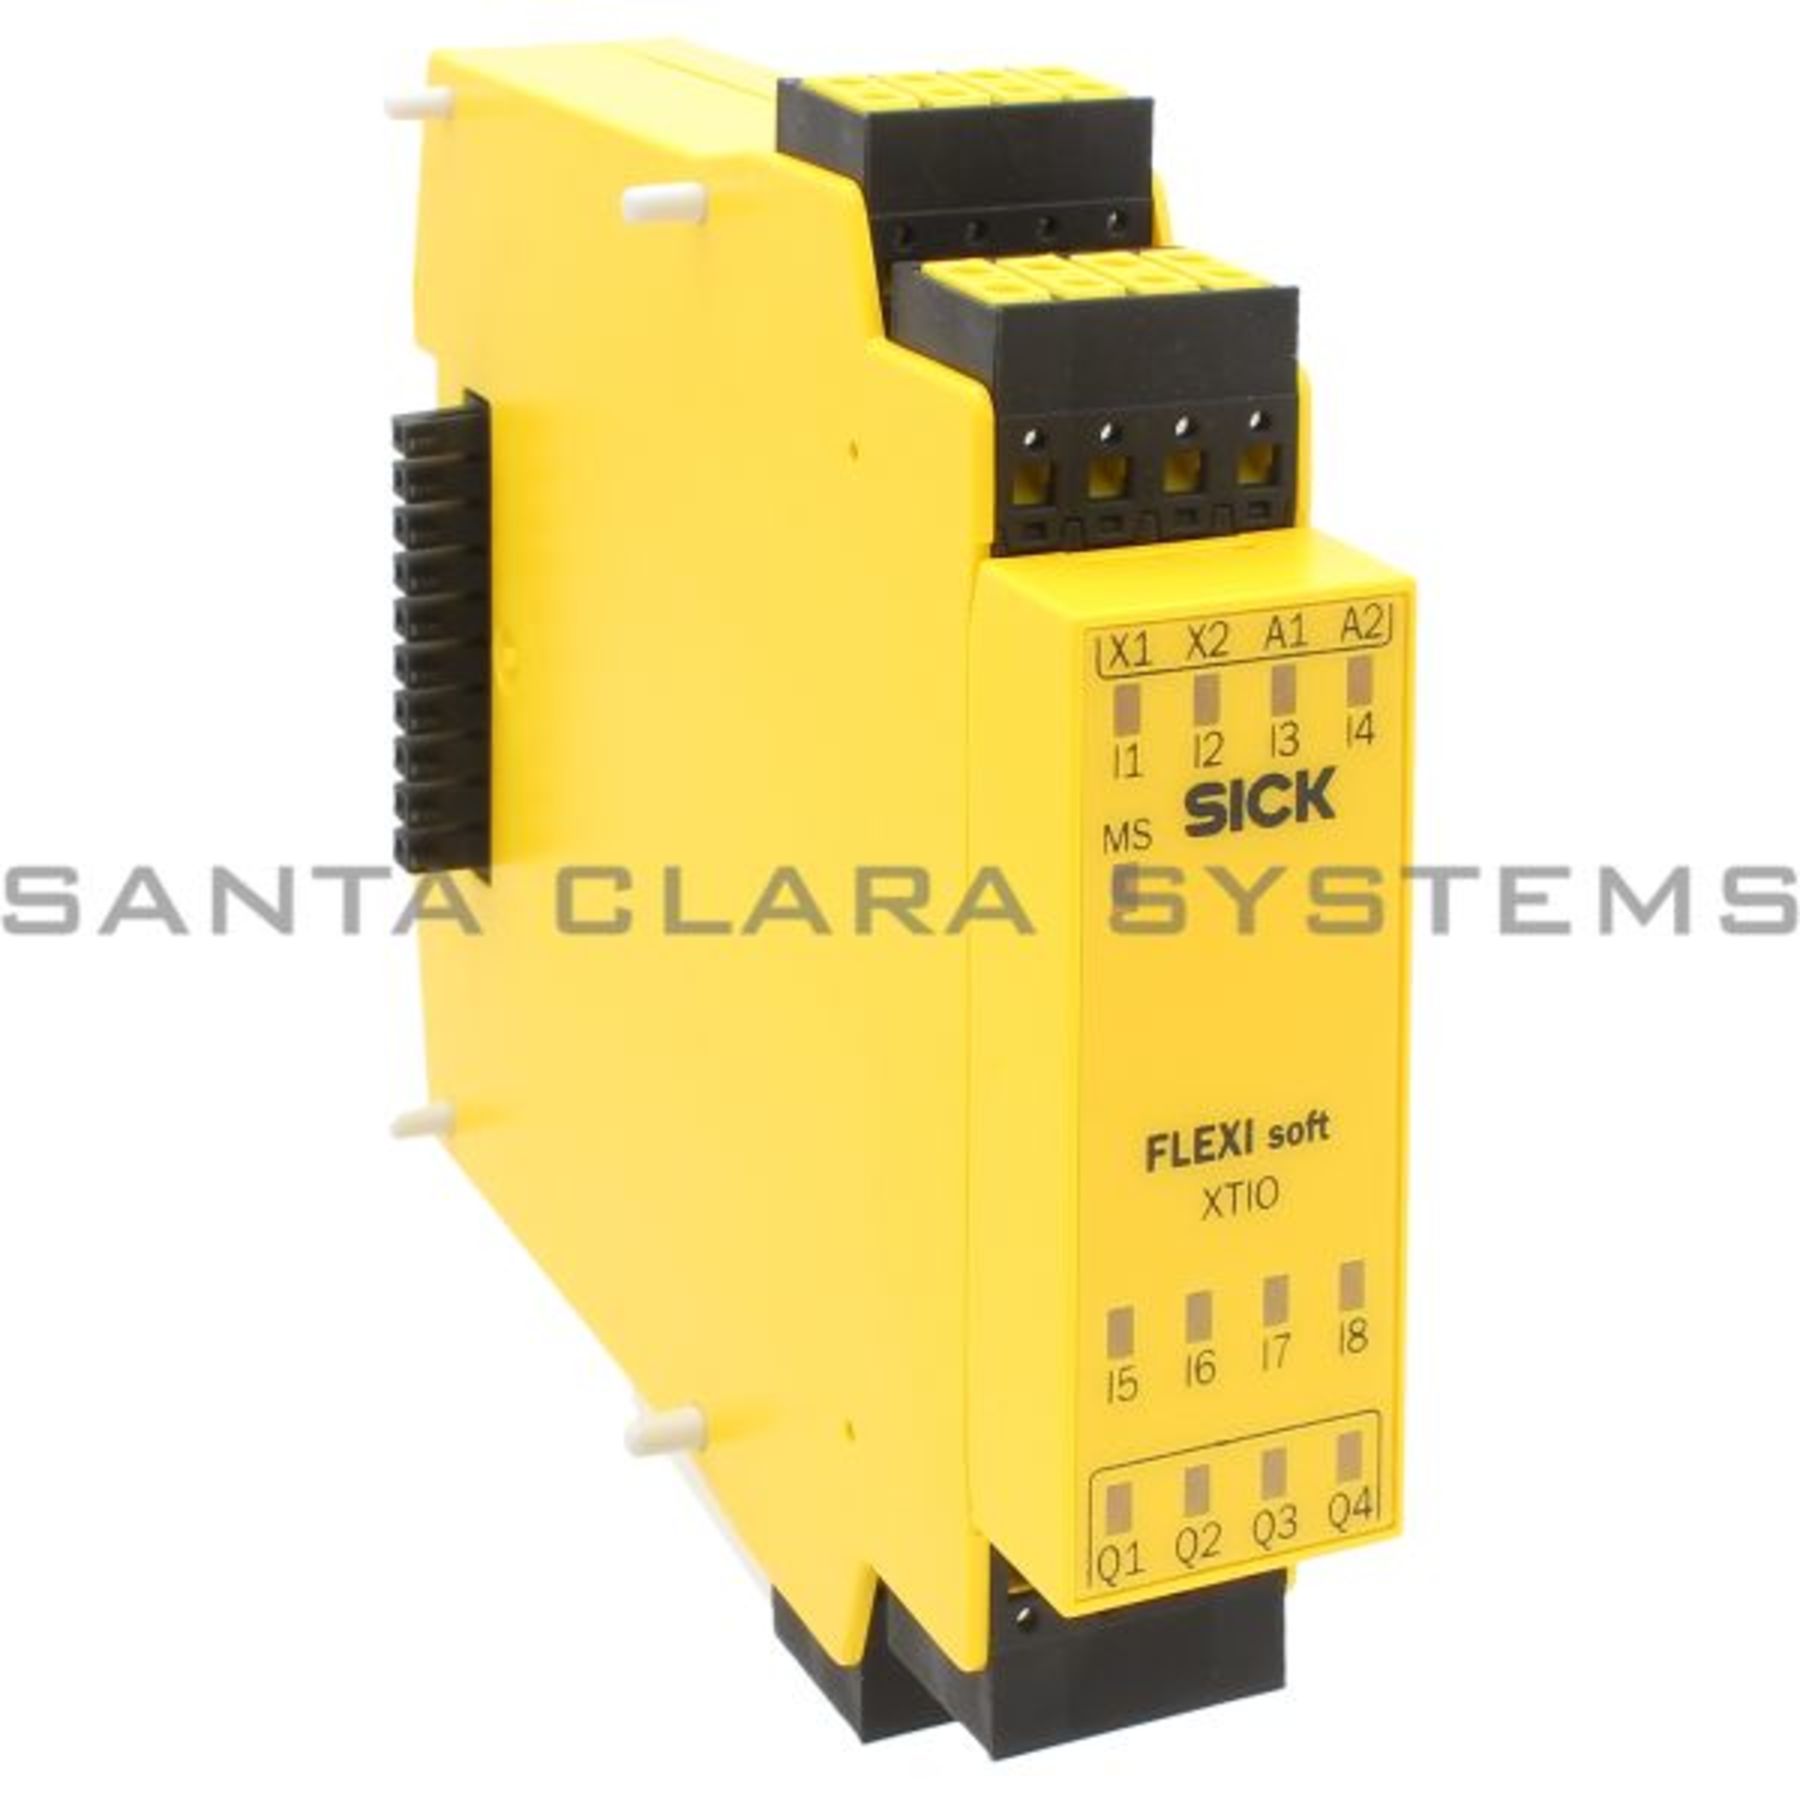 FX3-XTIO84002 Sick In stock and ready to ship - Santa Clara Systems